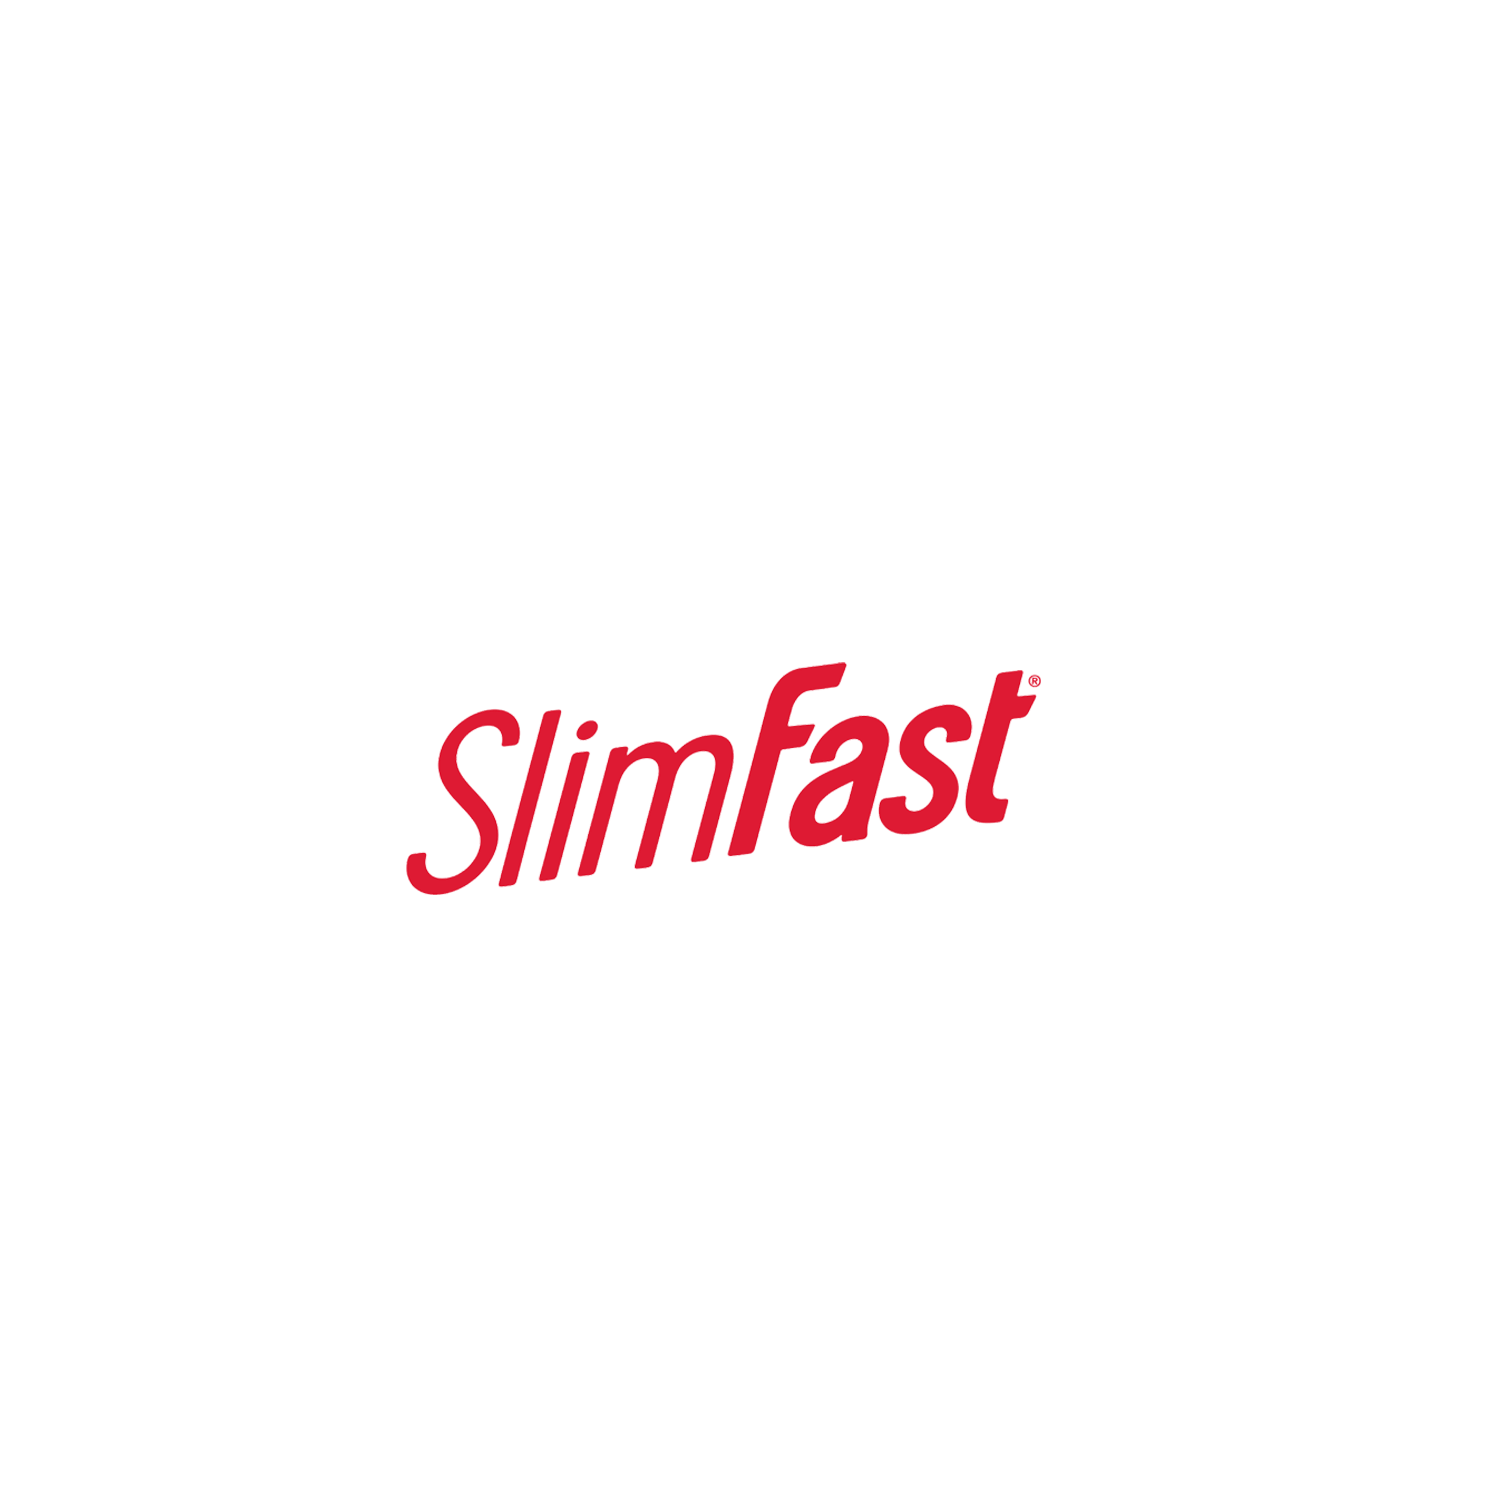 Slimfast logo